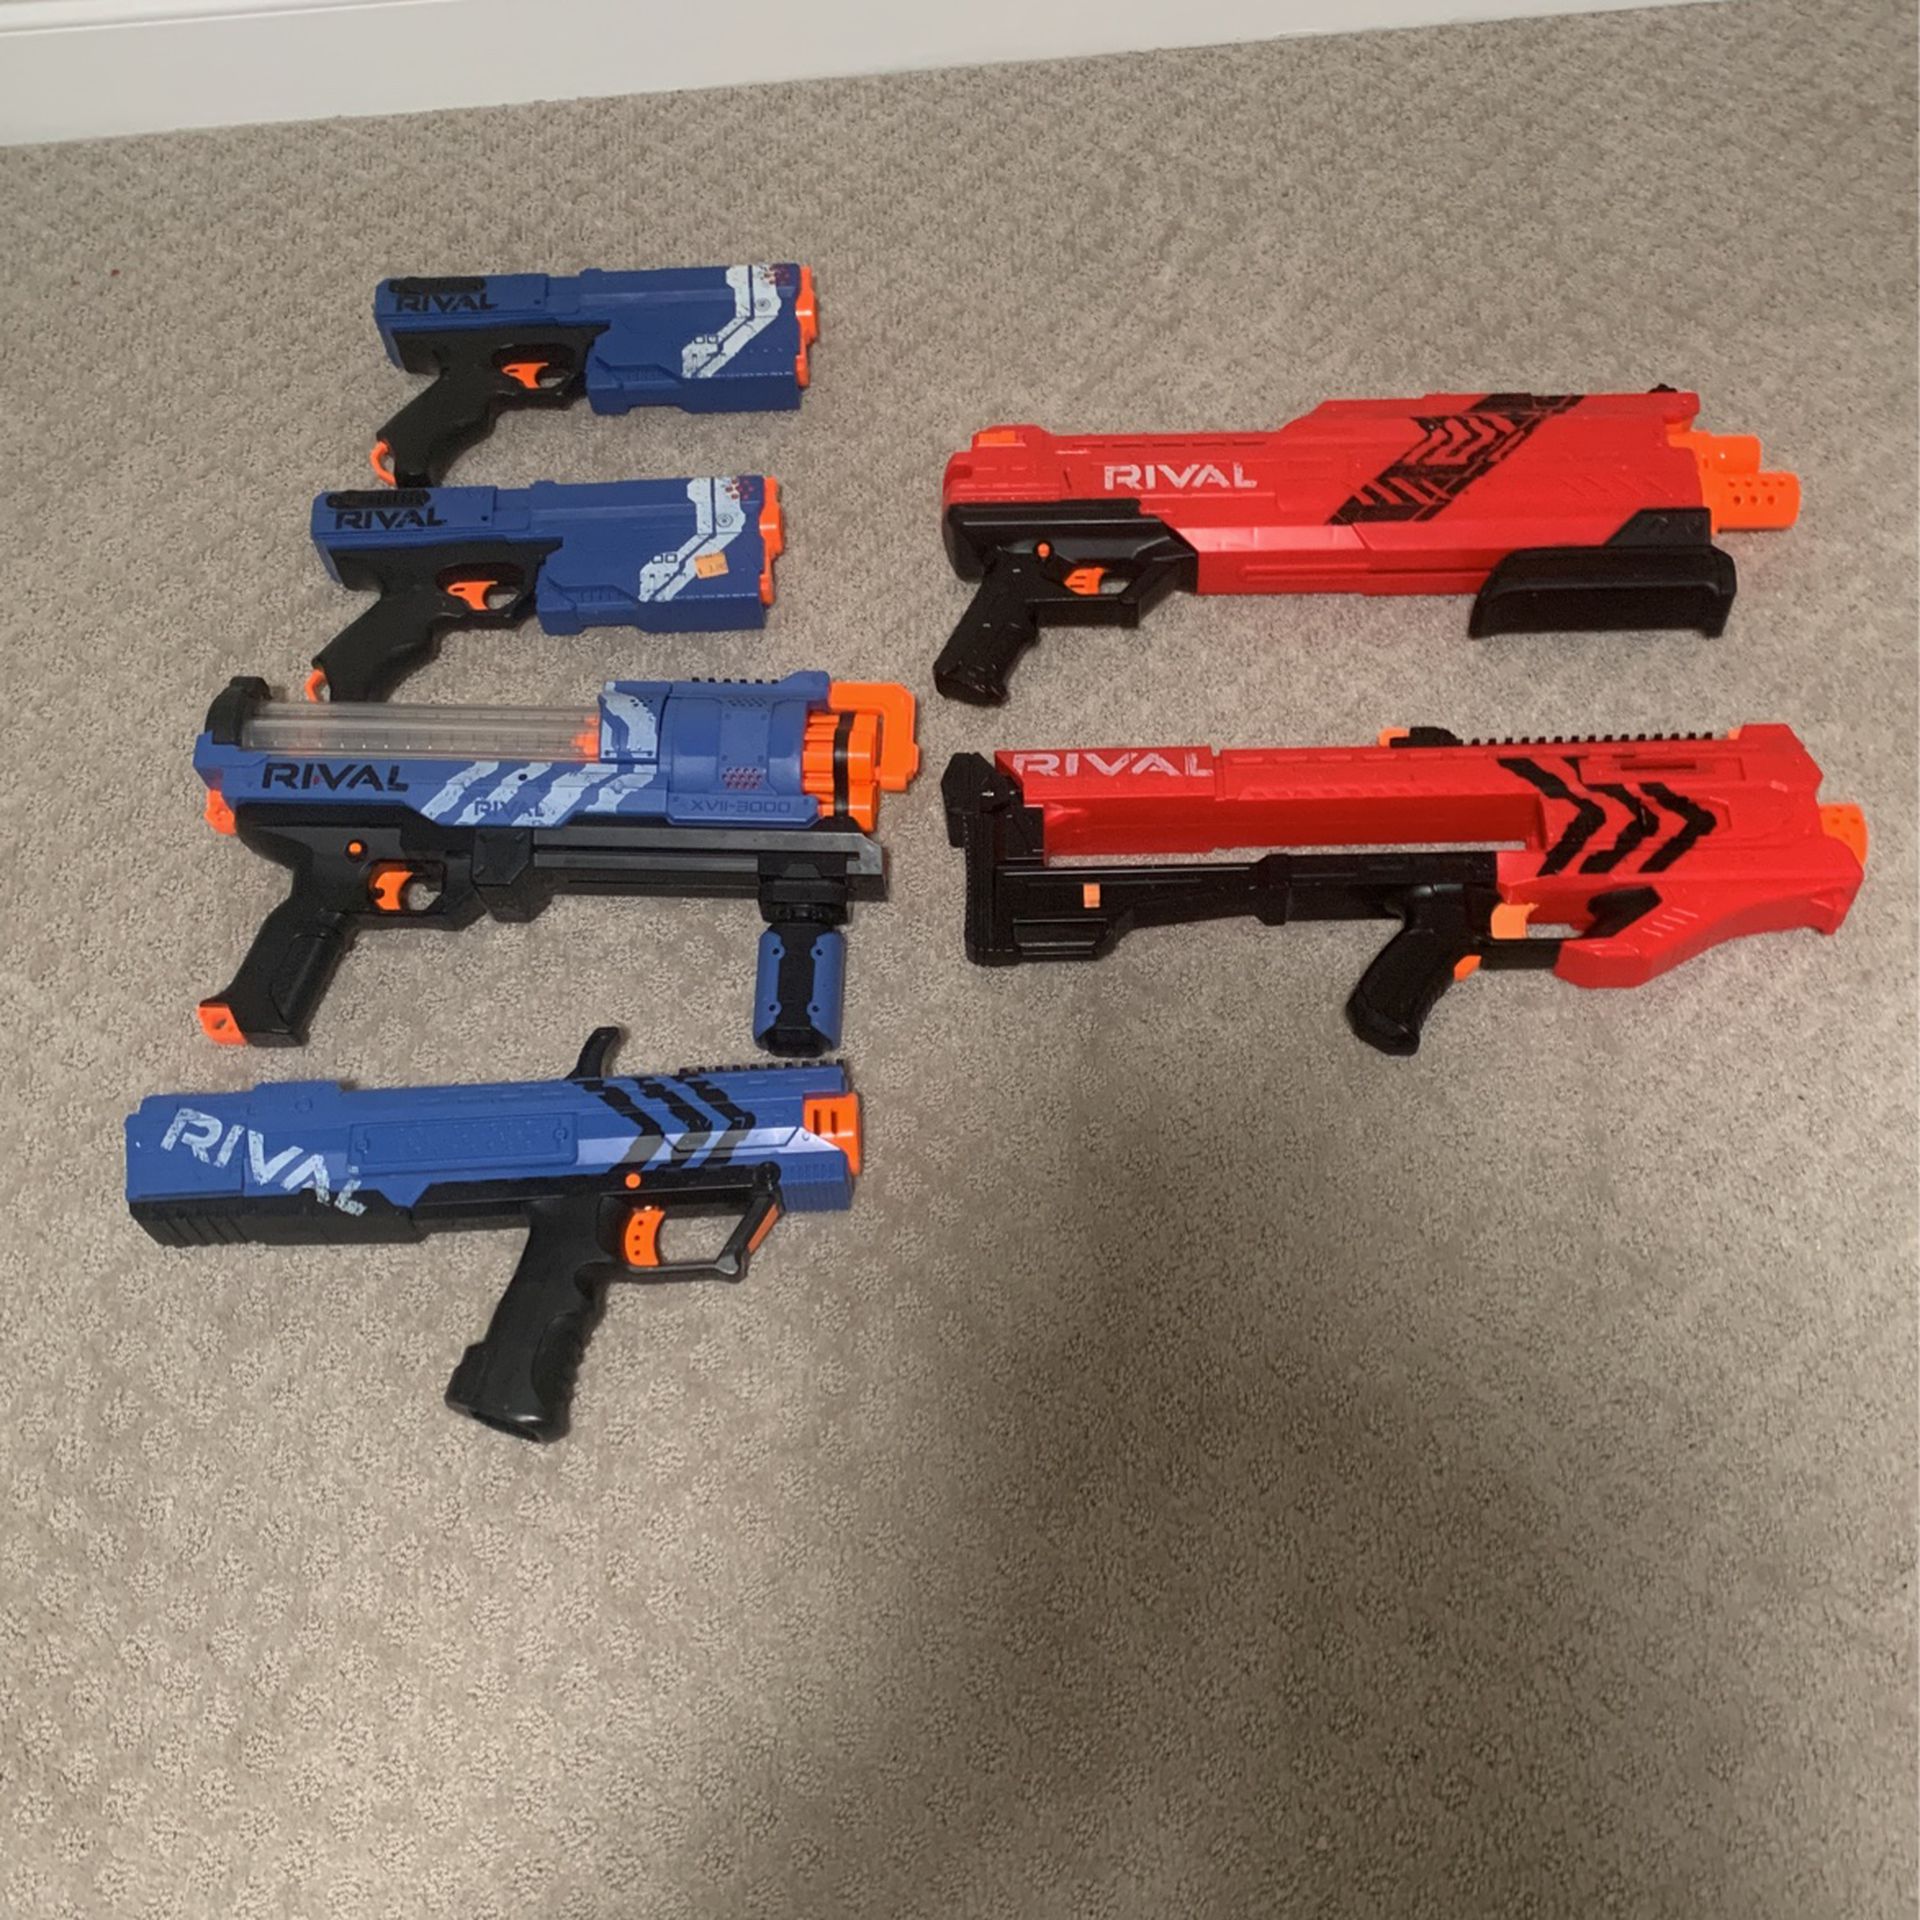 6 Nerf Rival Guns